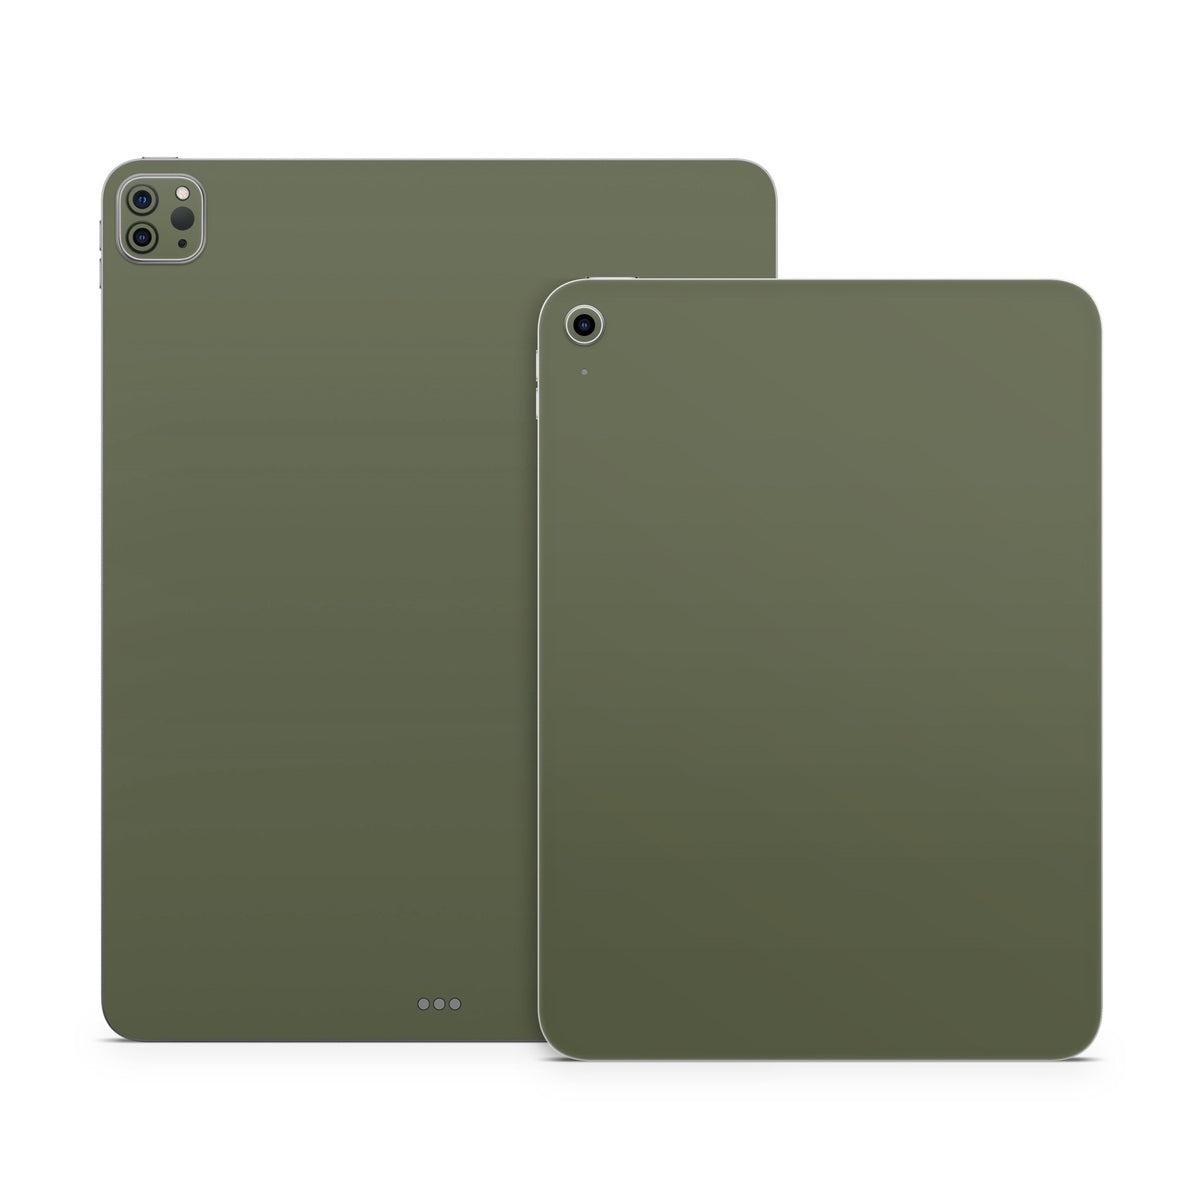 Solid State Olive Drab - Apple iPad Skin